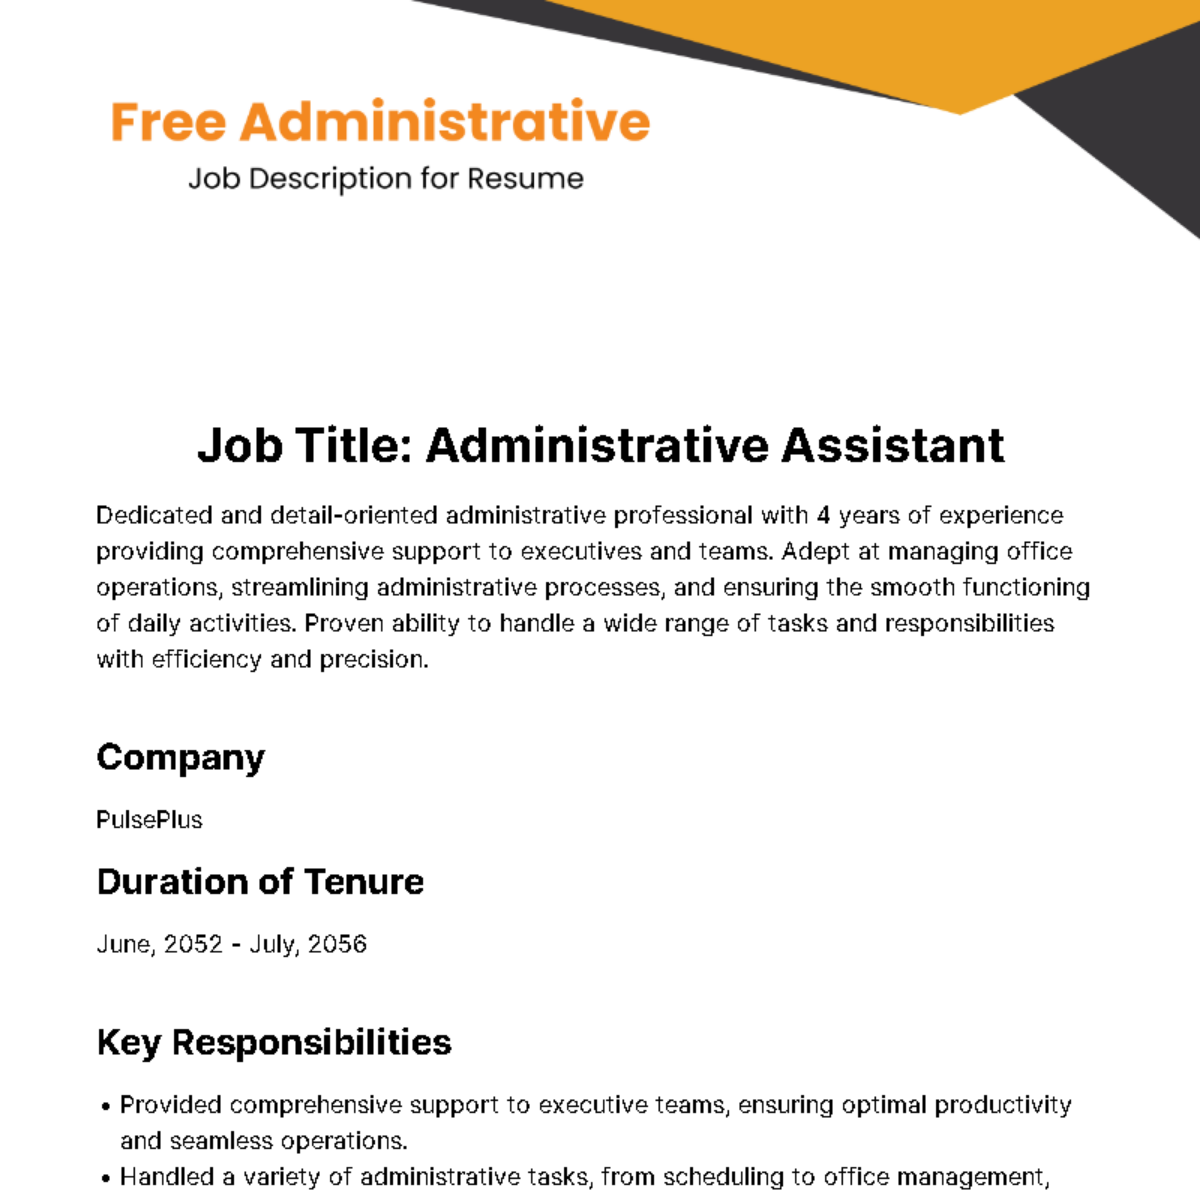 Free Administrative Job Description for Resume Template